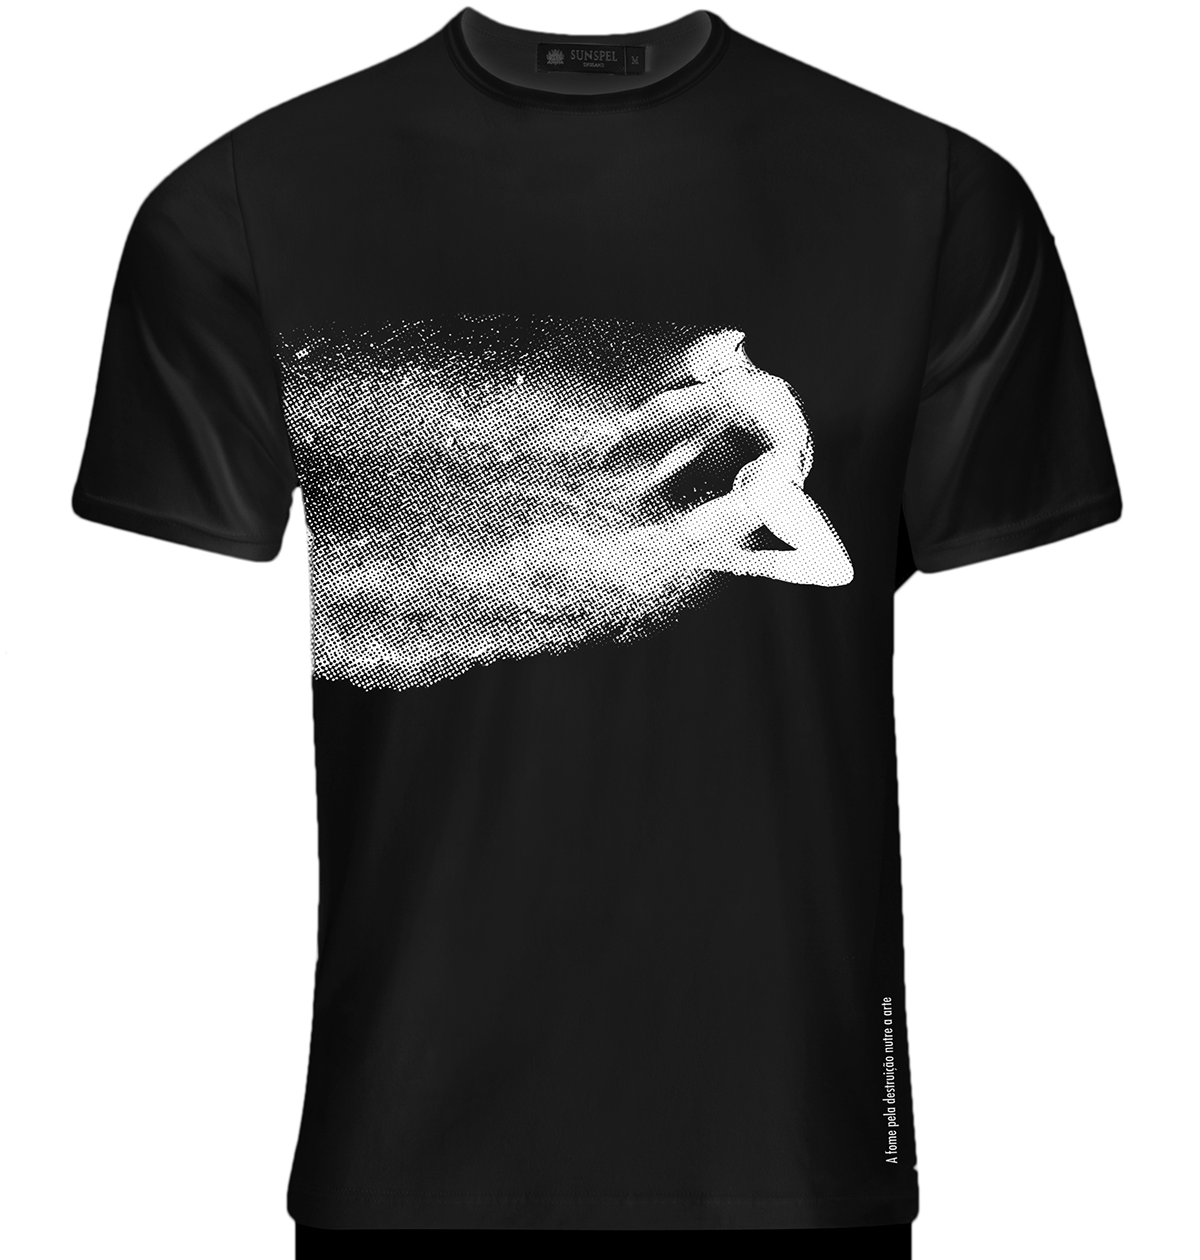 t-shirt dancer black and white reticle 8bit